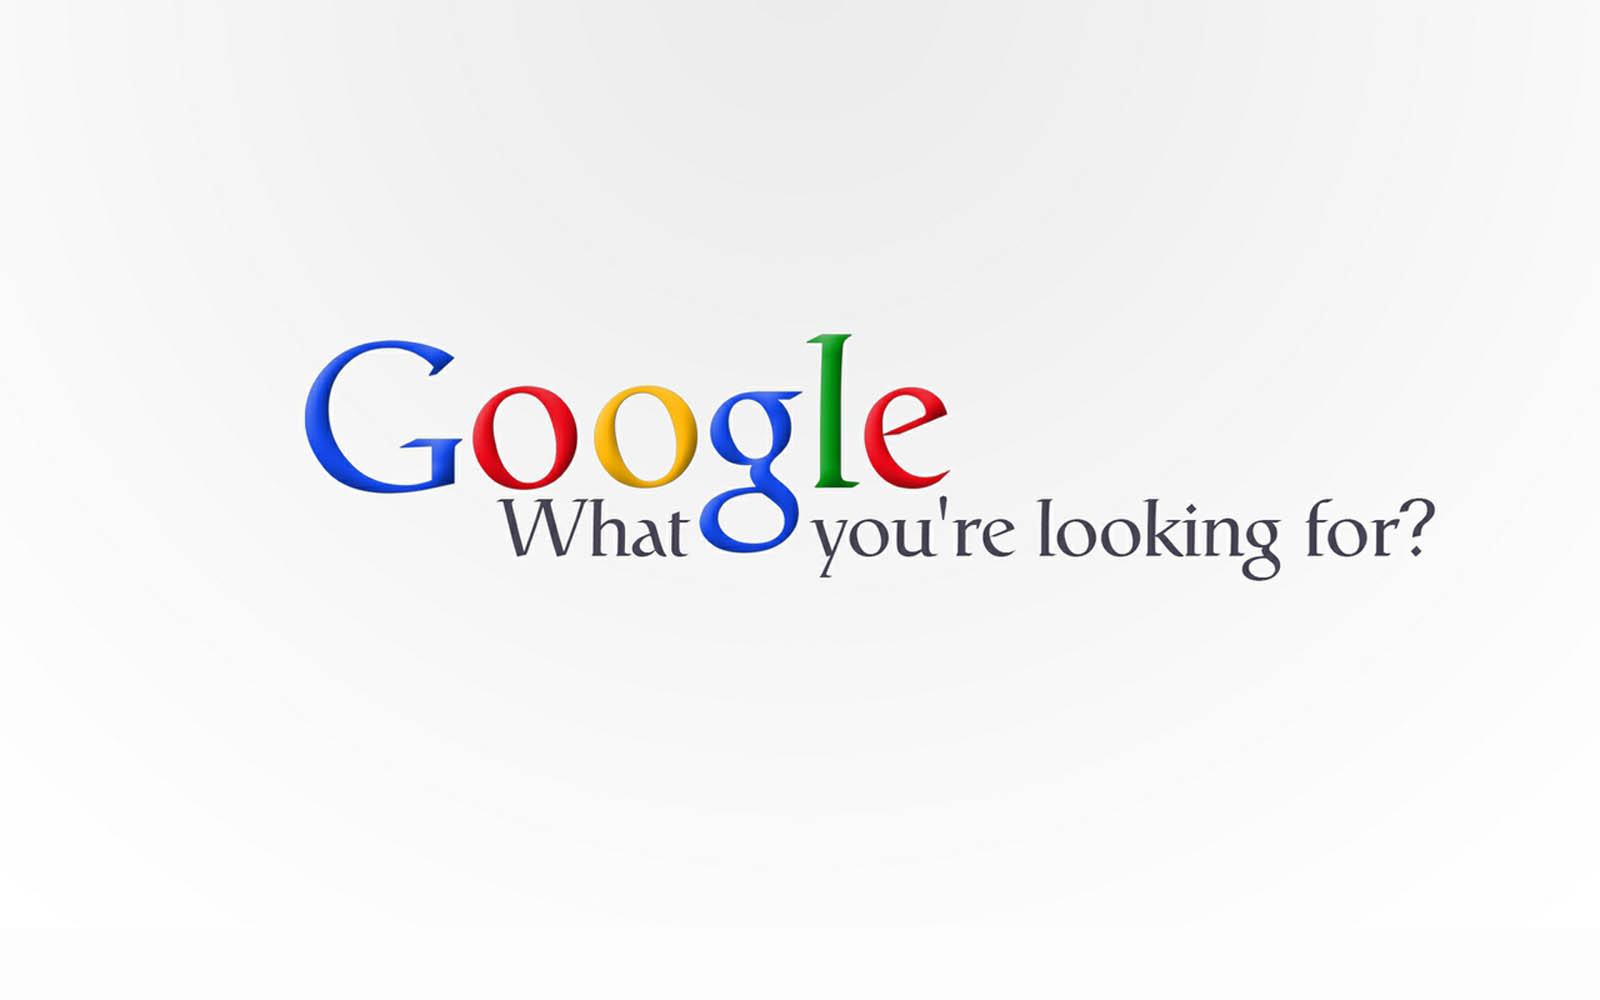  Wallpapers Google Desktop Backgrounds Google Photos Google Images 1600x1000